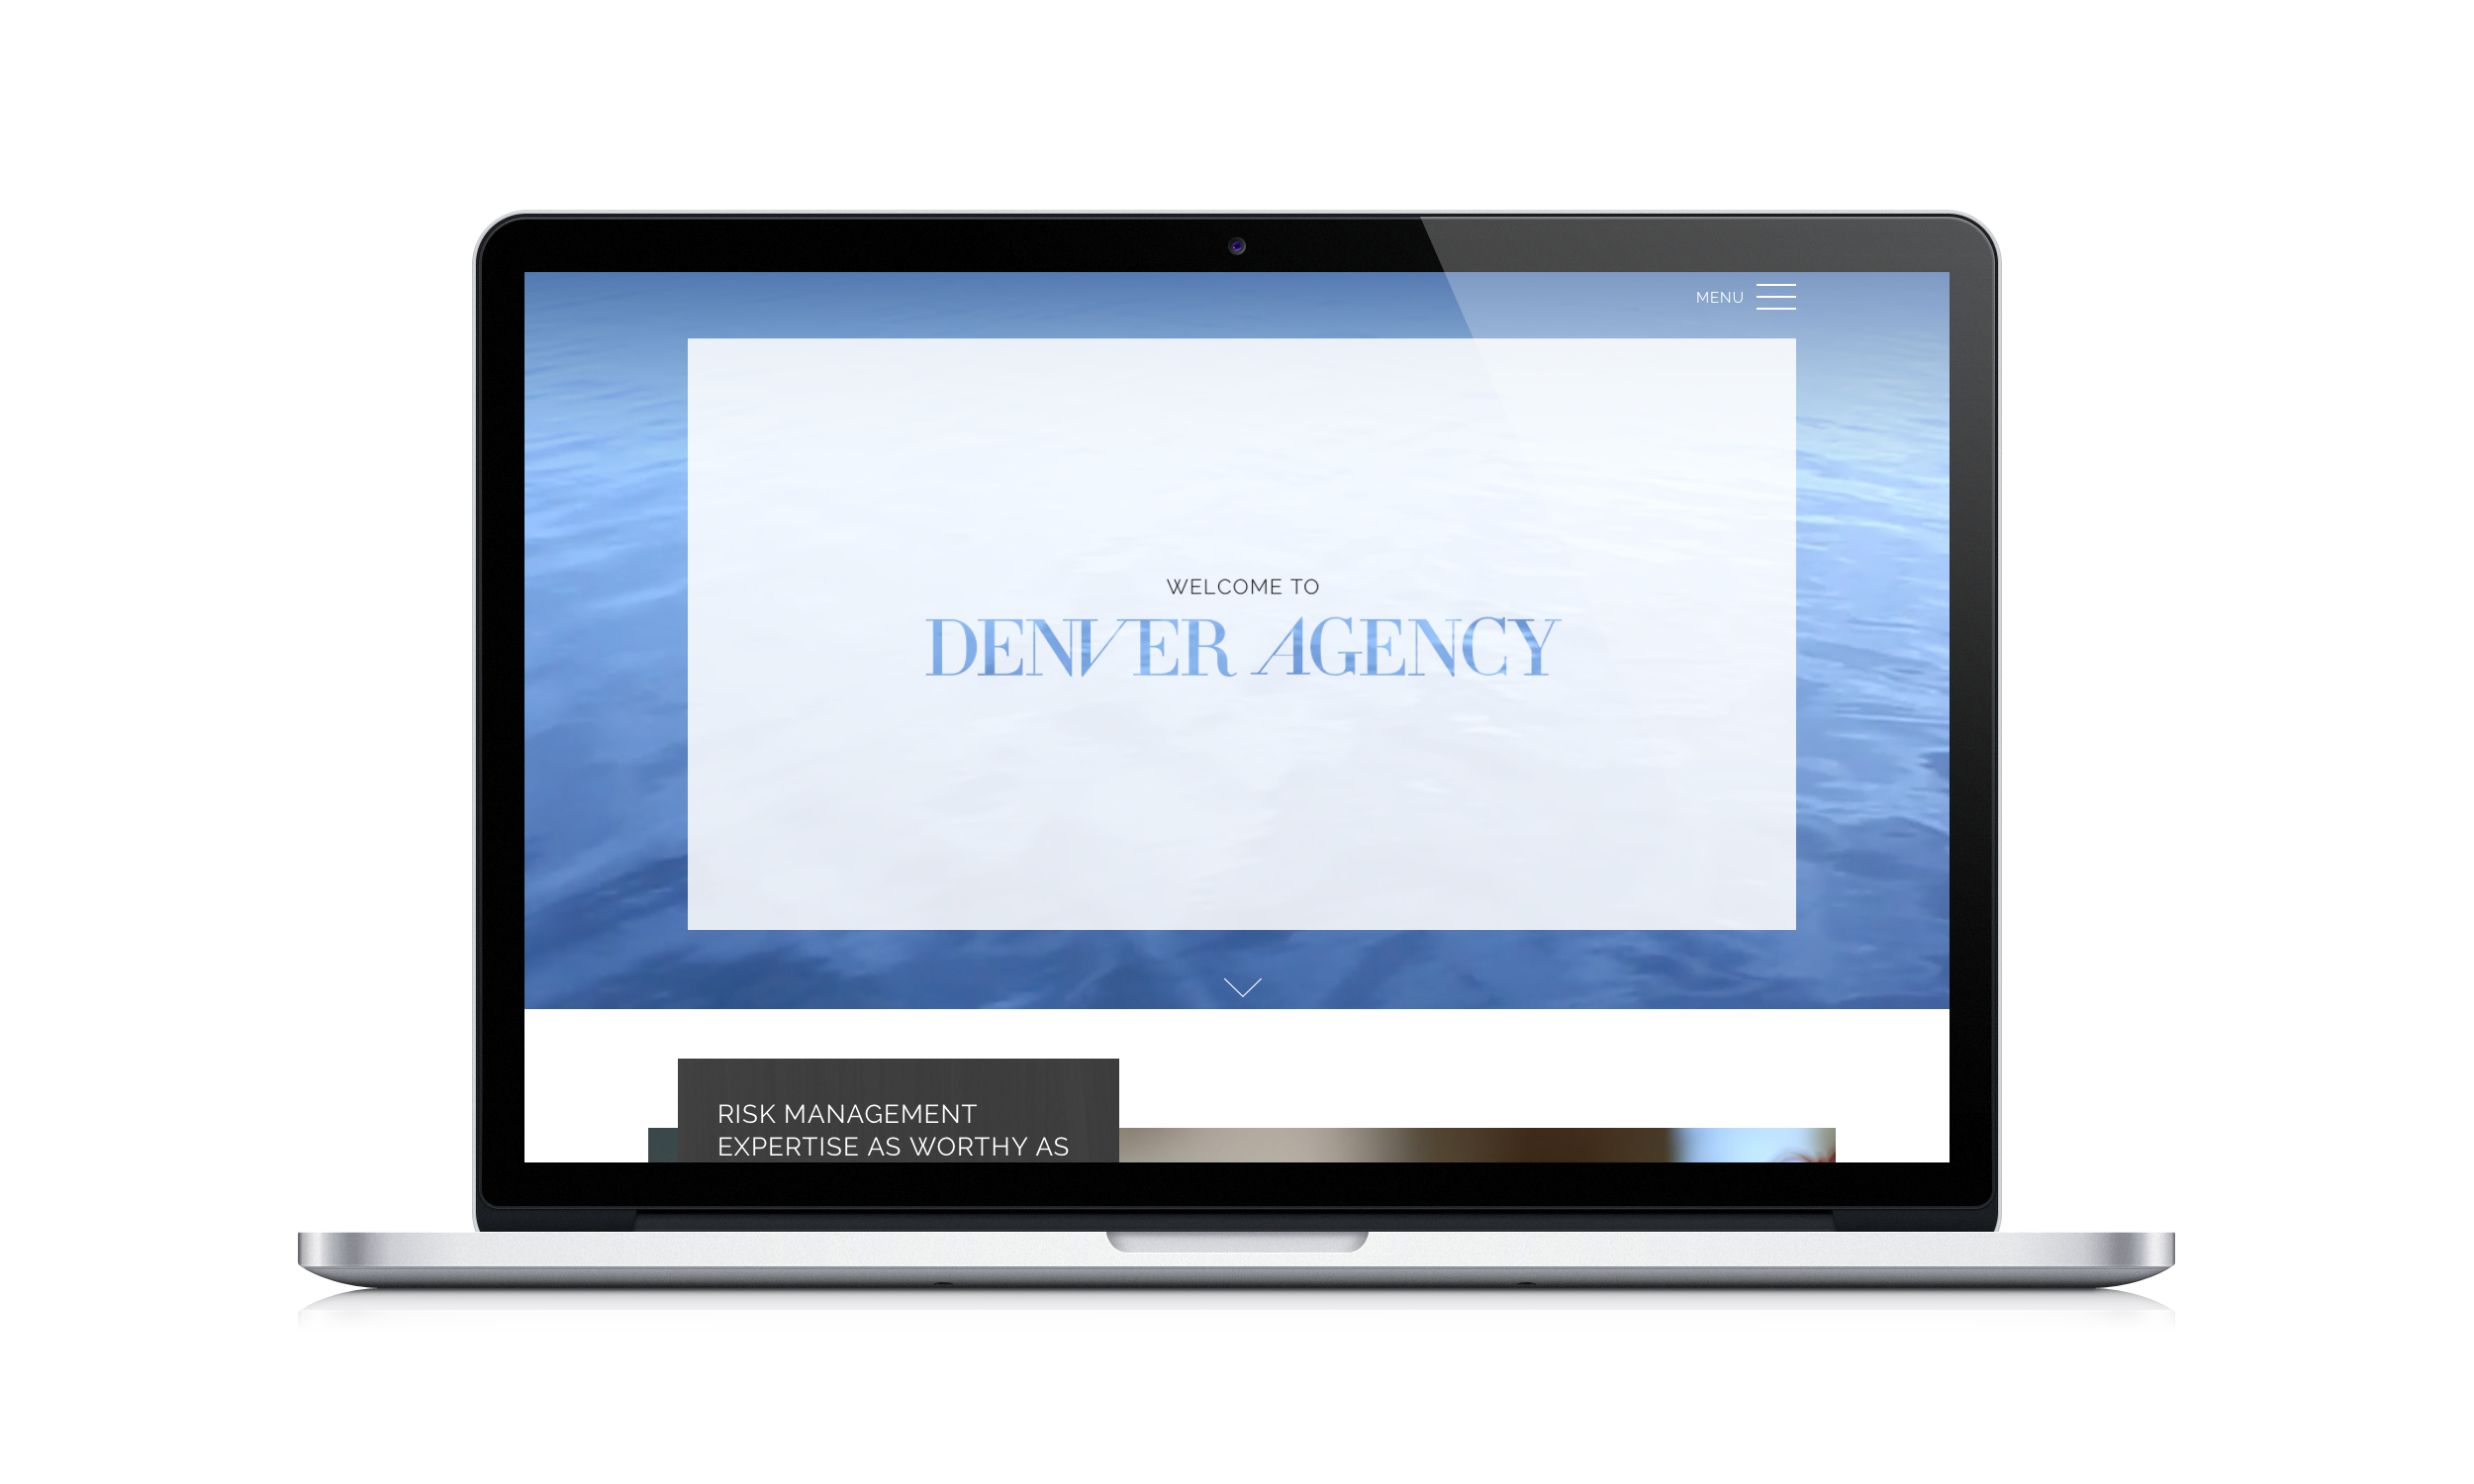 DenverAgency.com homepage